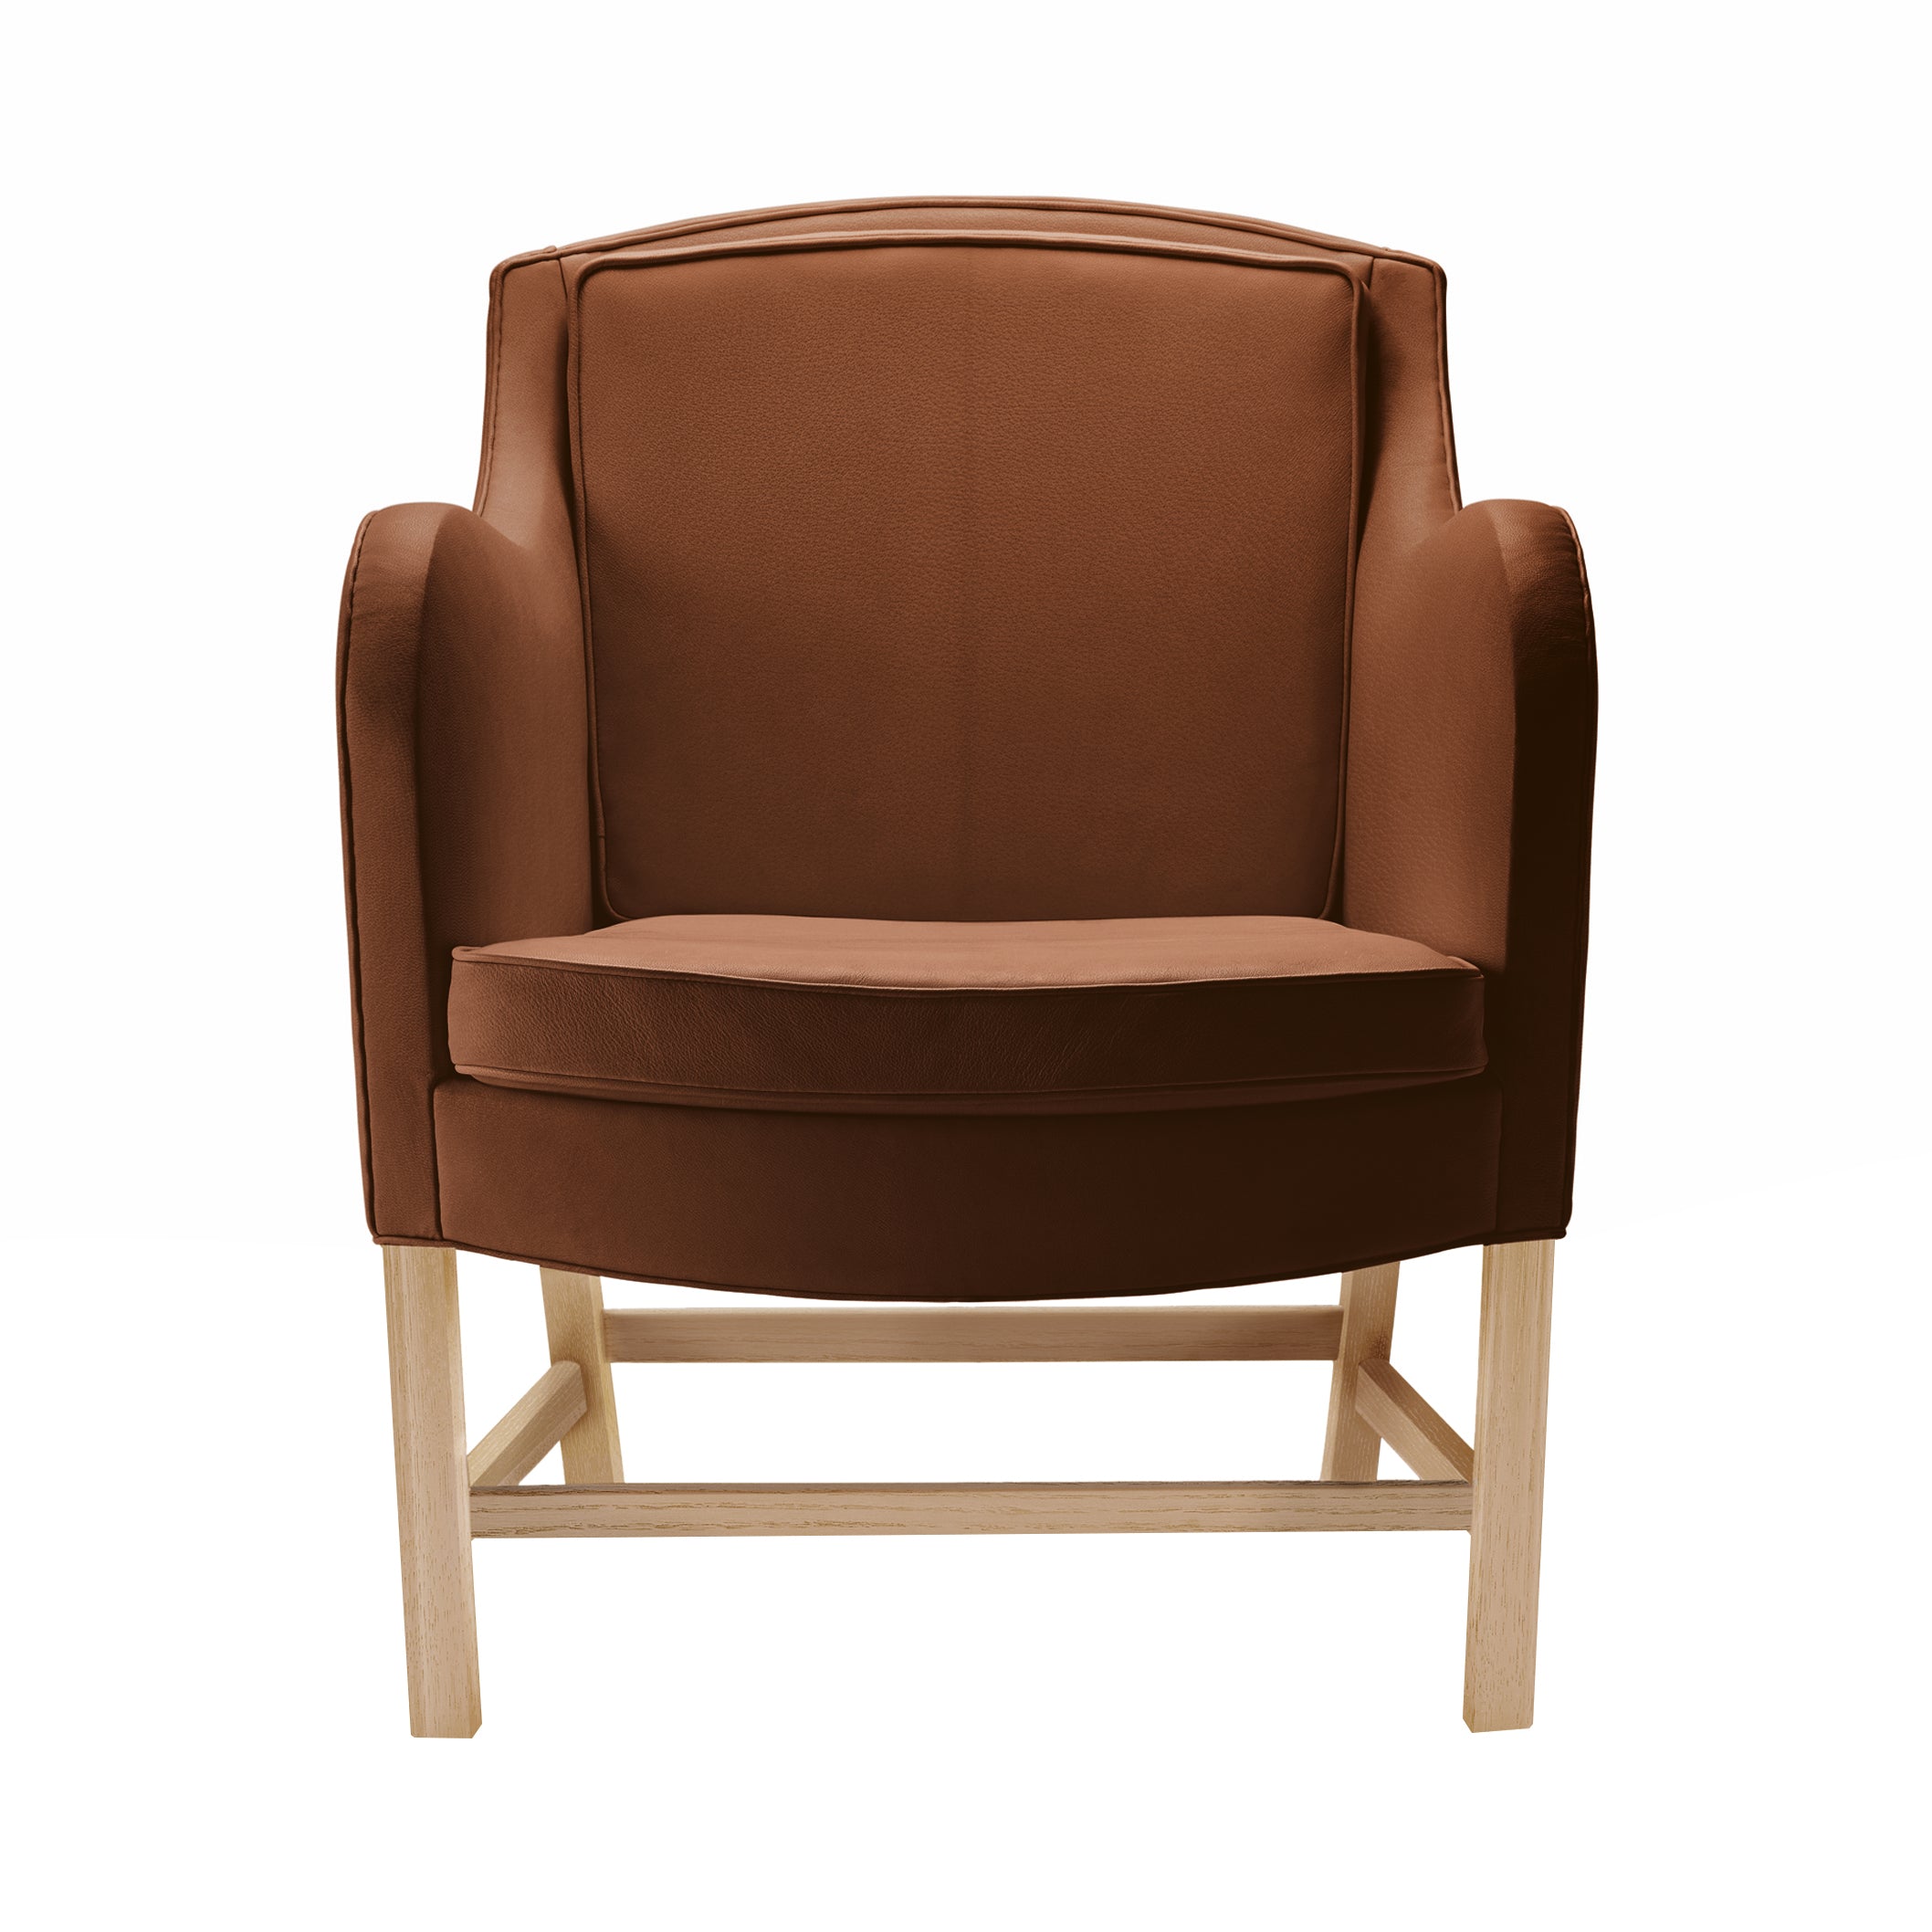 KK43960 Mix Chair: Oiled Oak